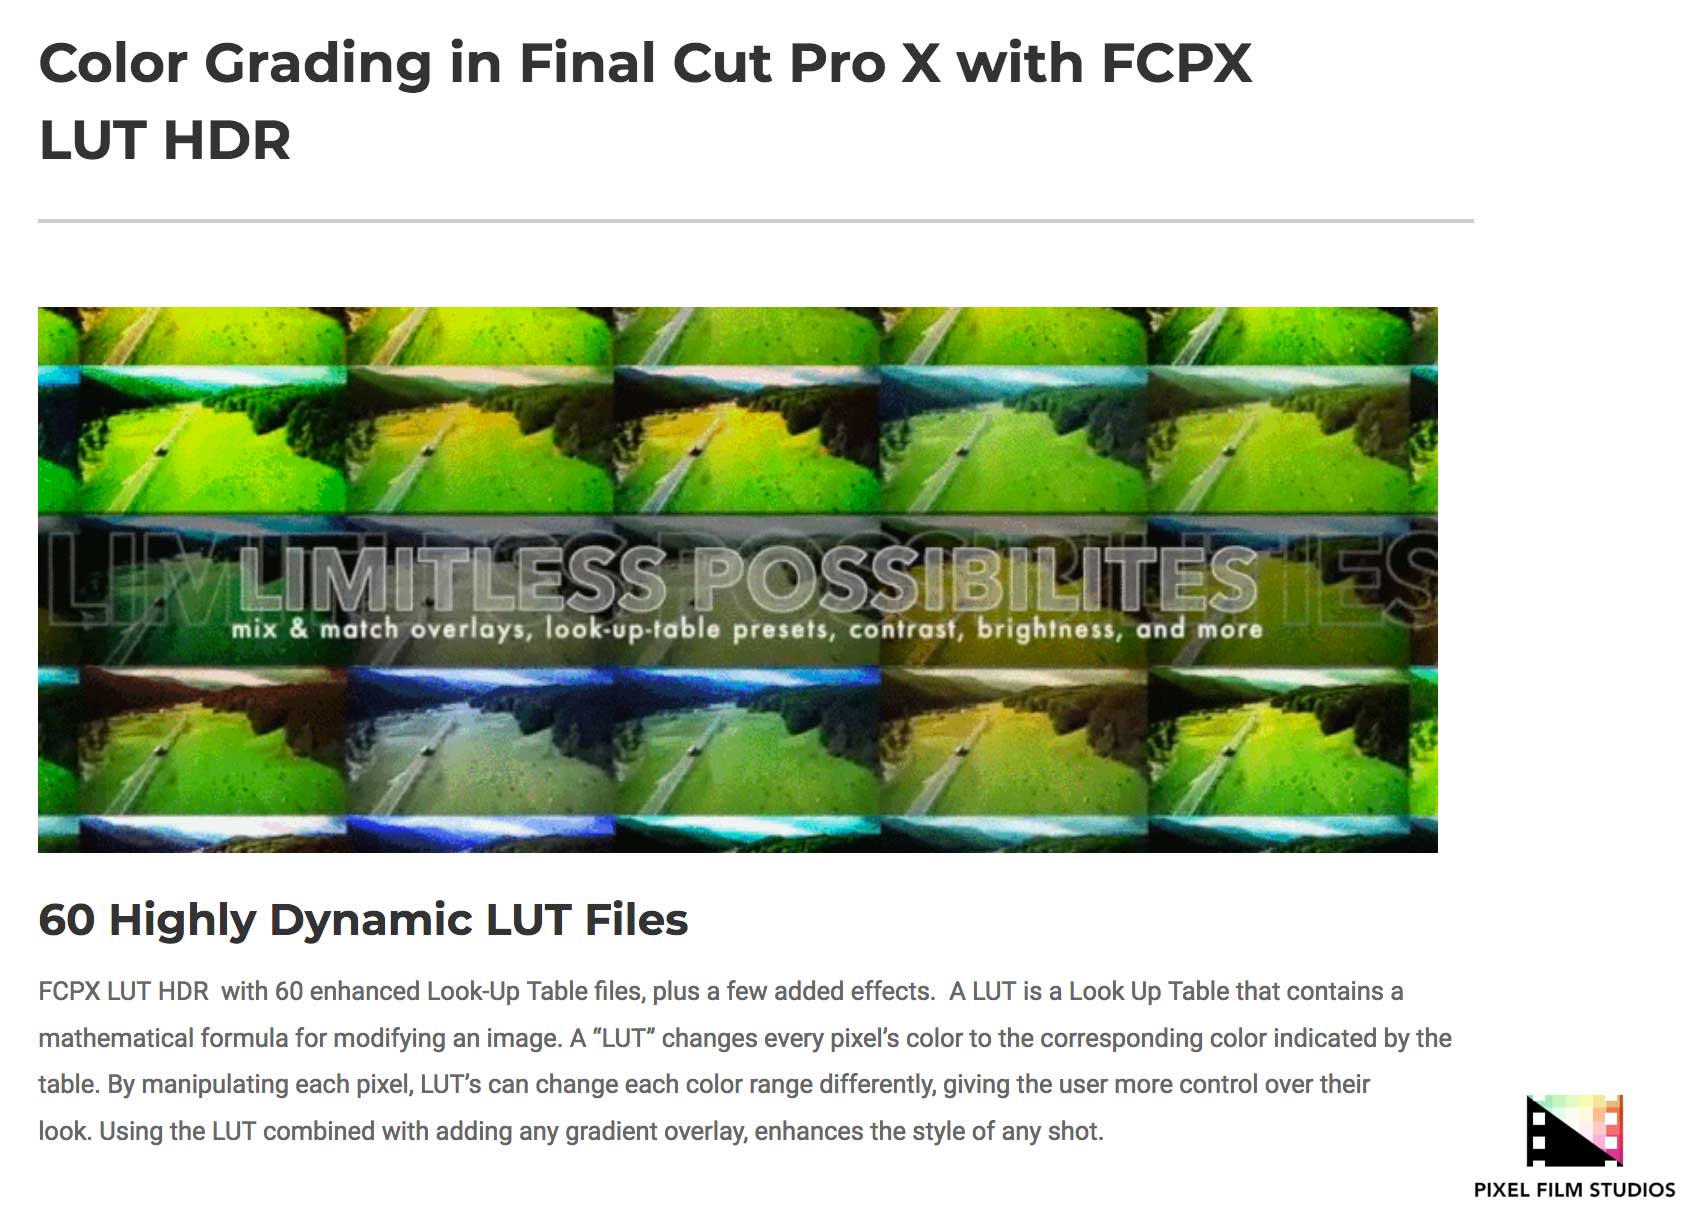 FCPX LUT HDR - Final Cut Pro X Effects - Pixel Film Studios